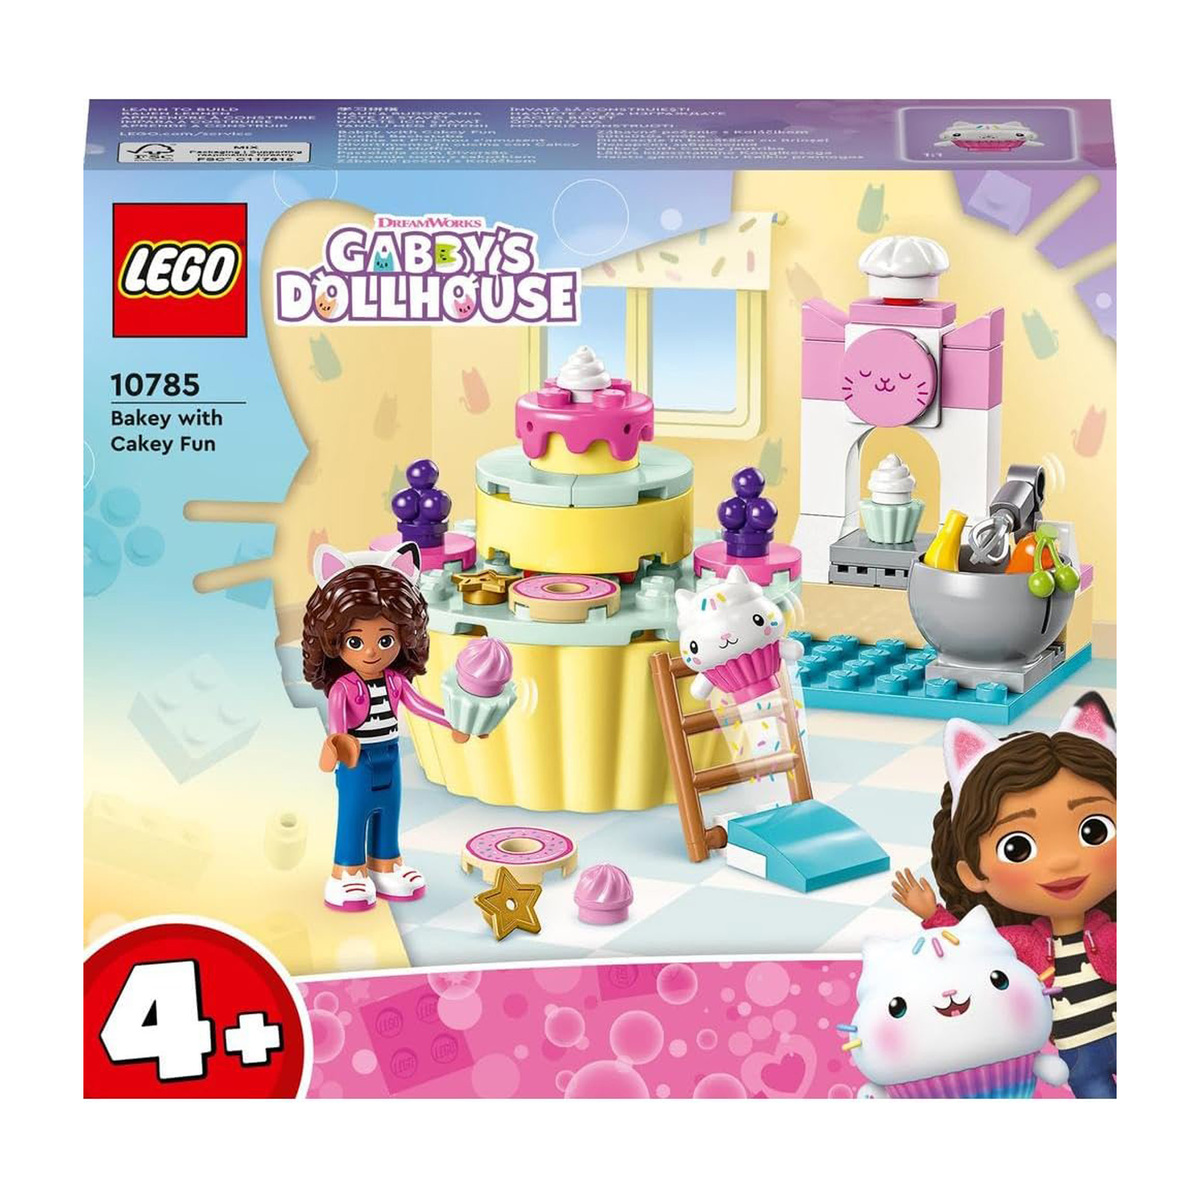 Lego Gabby's Dollhouse Bakery with Cakey Fun Playset, 10785